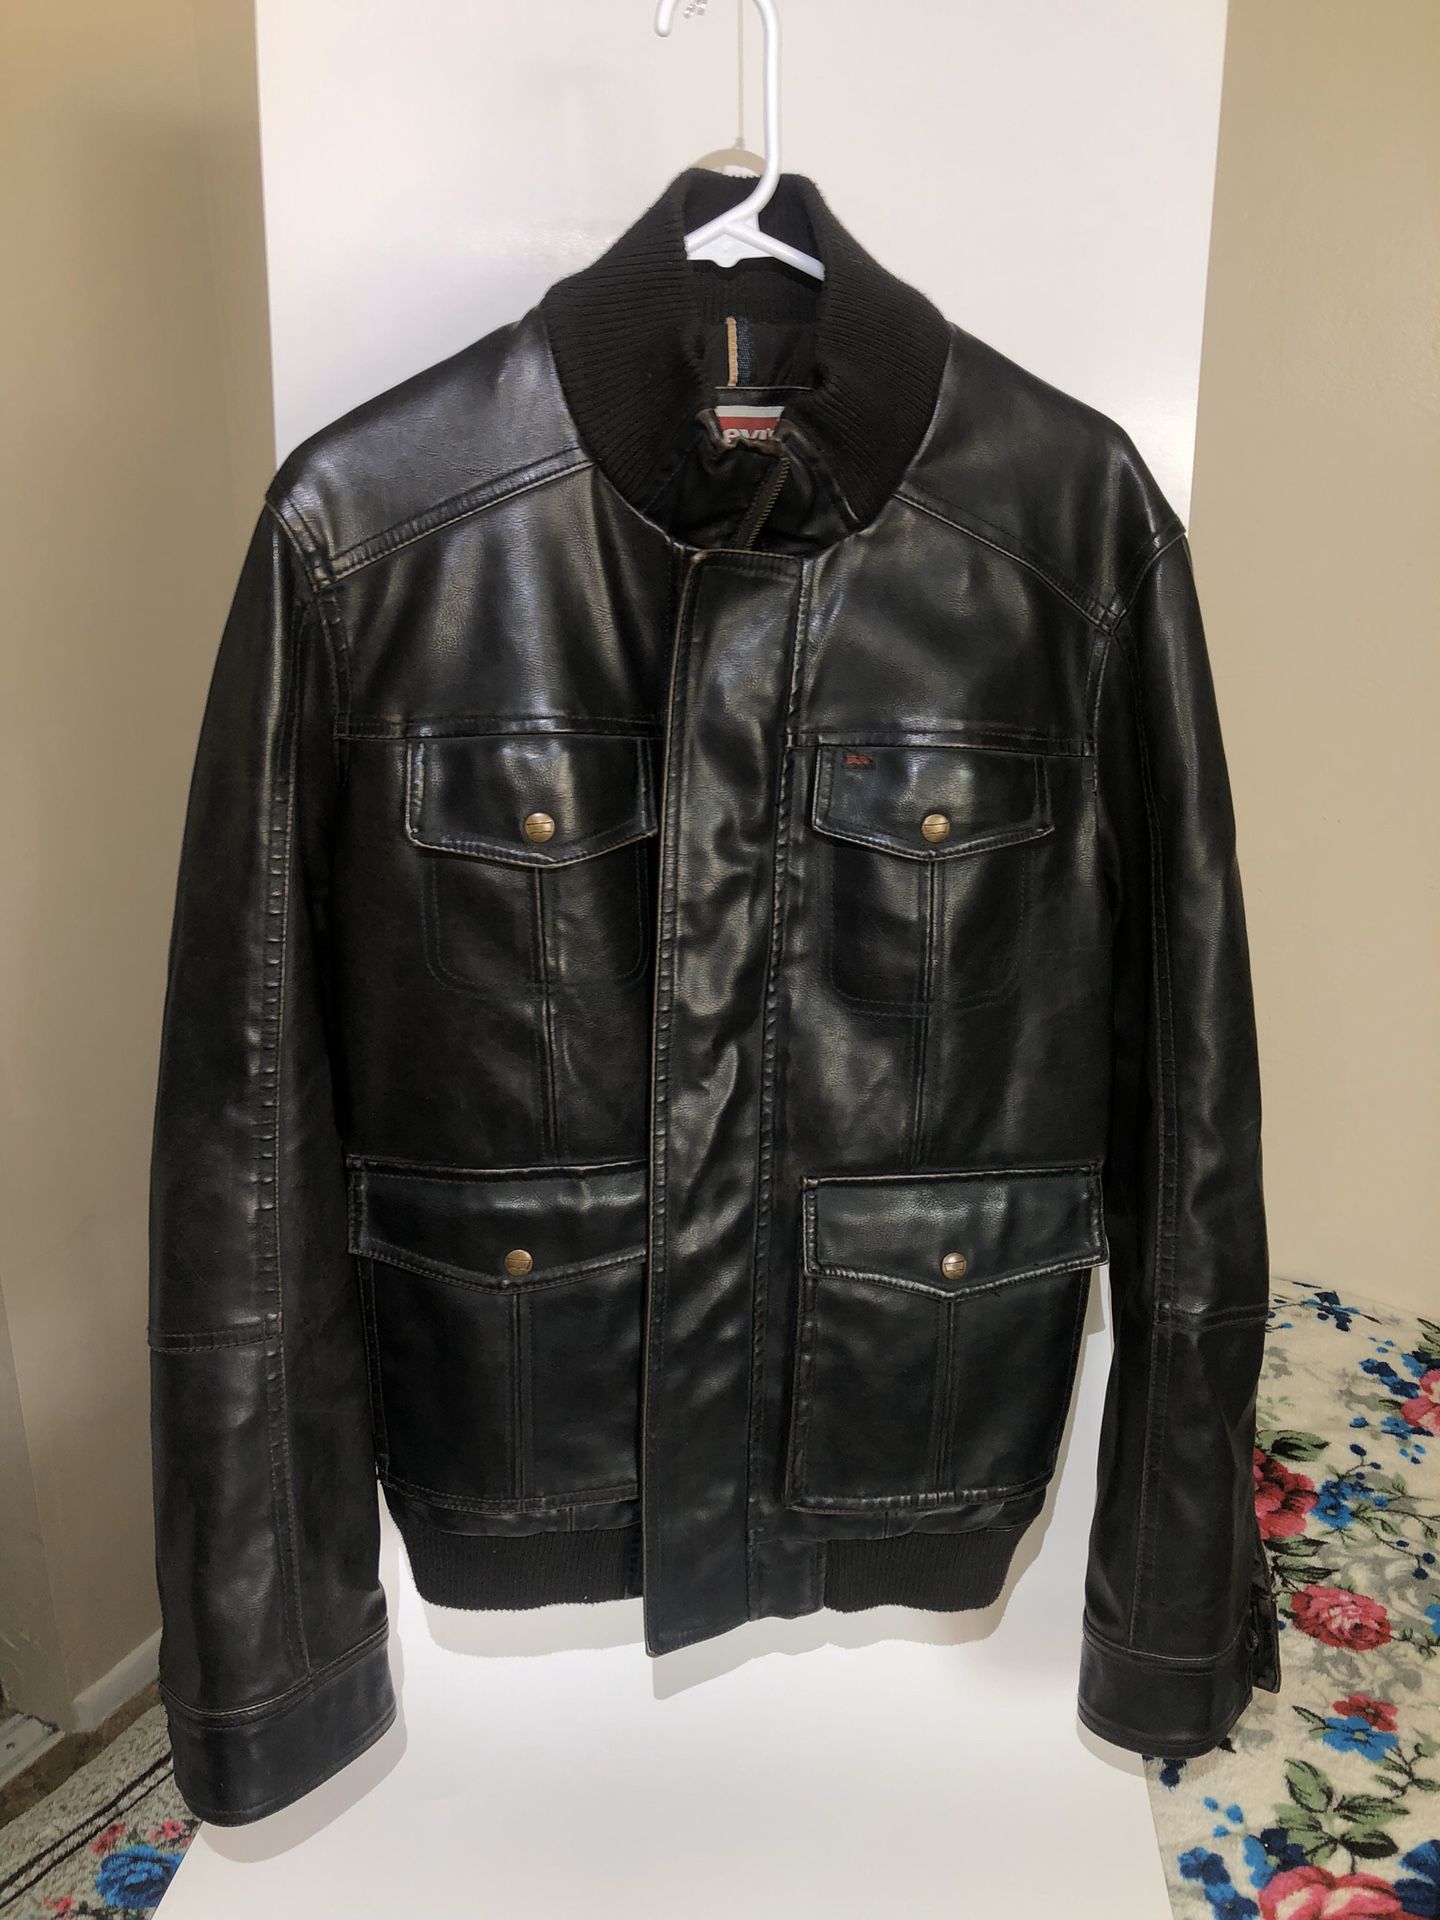 Levi’s Leather Jacket for Sale in Phoenix, AZ - OfferUp